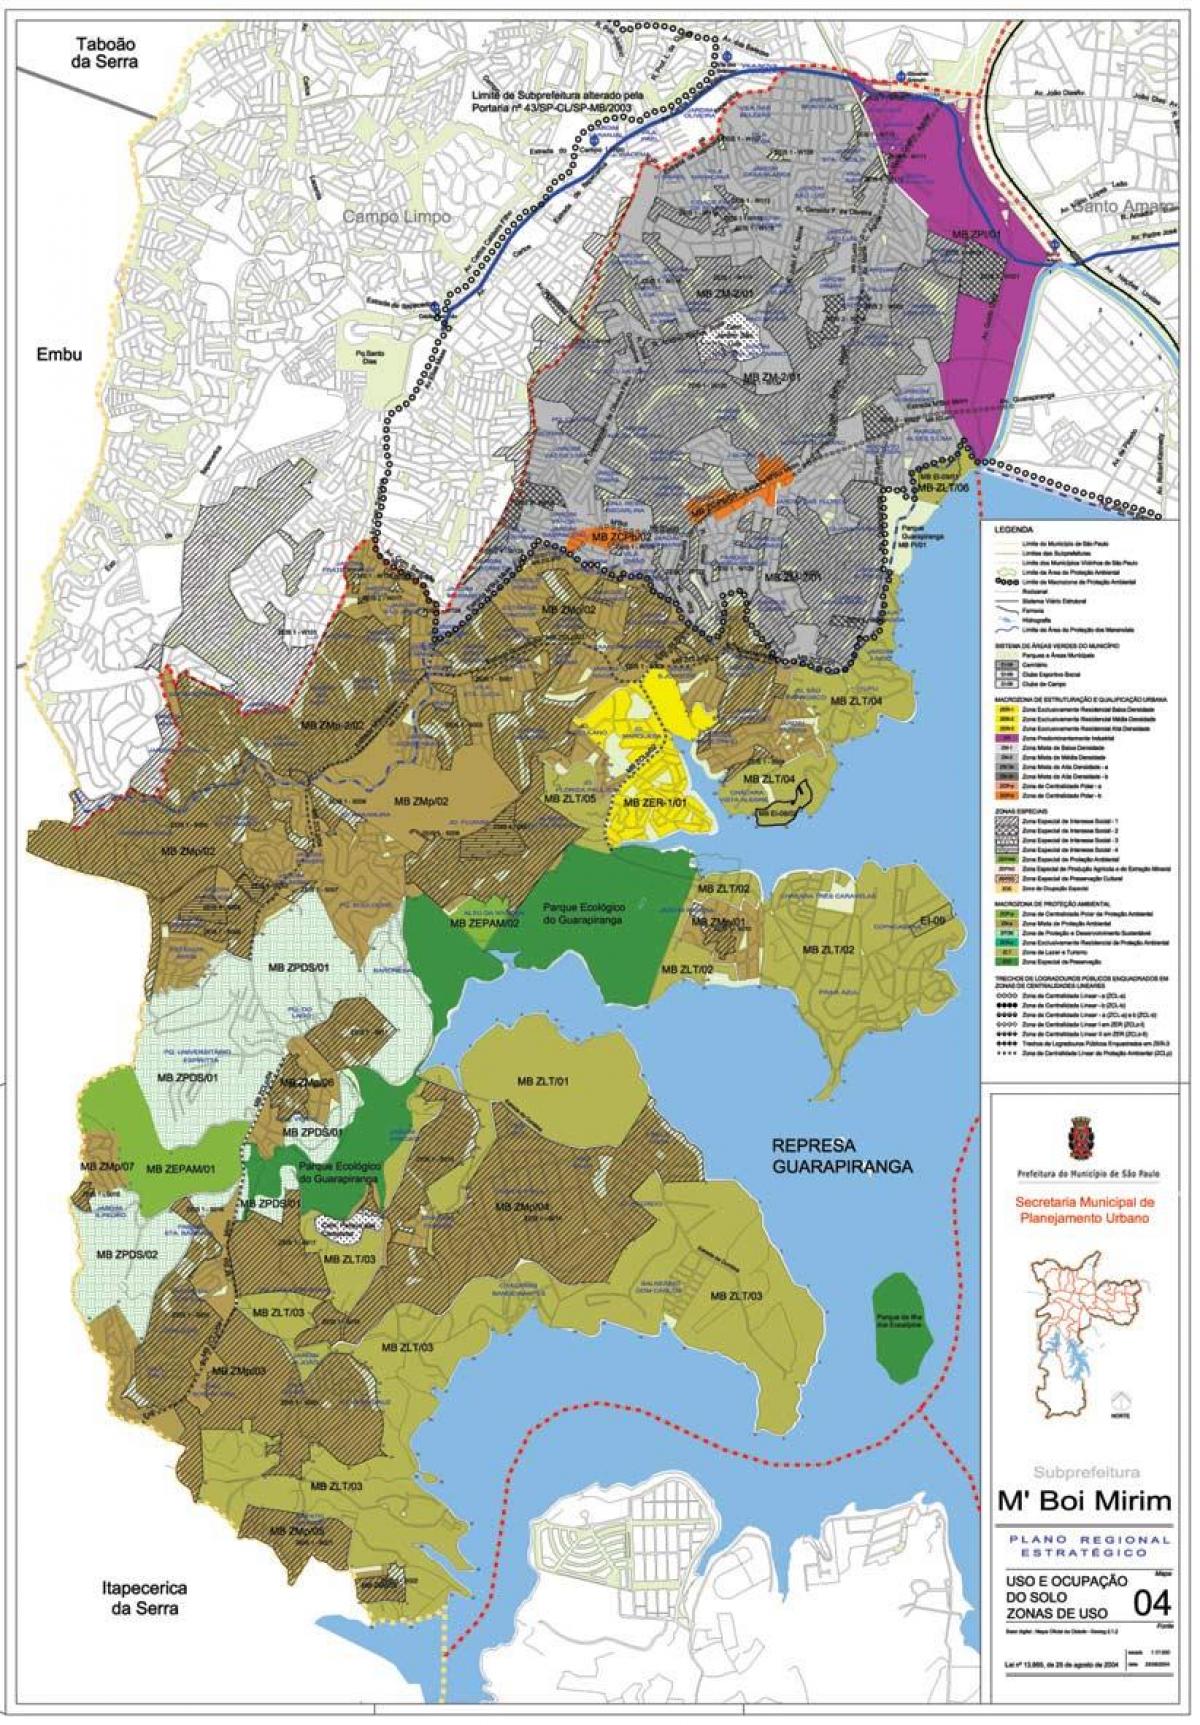 नक्शे के म्बोइ मीरीं साओ पाउलो - व्यवसाय की मिट्टी